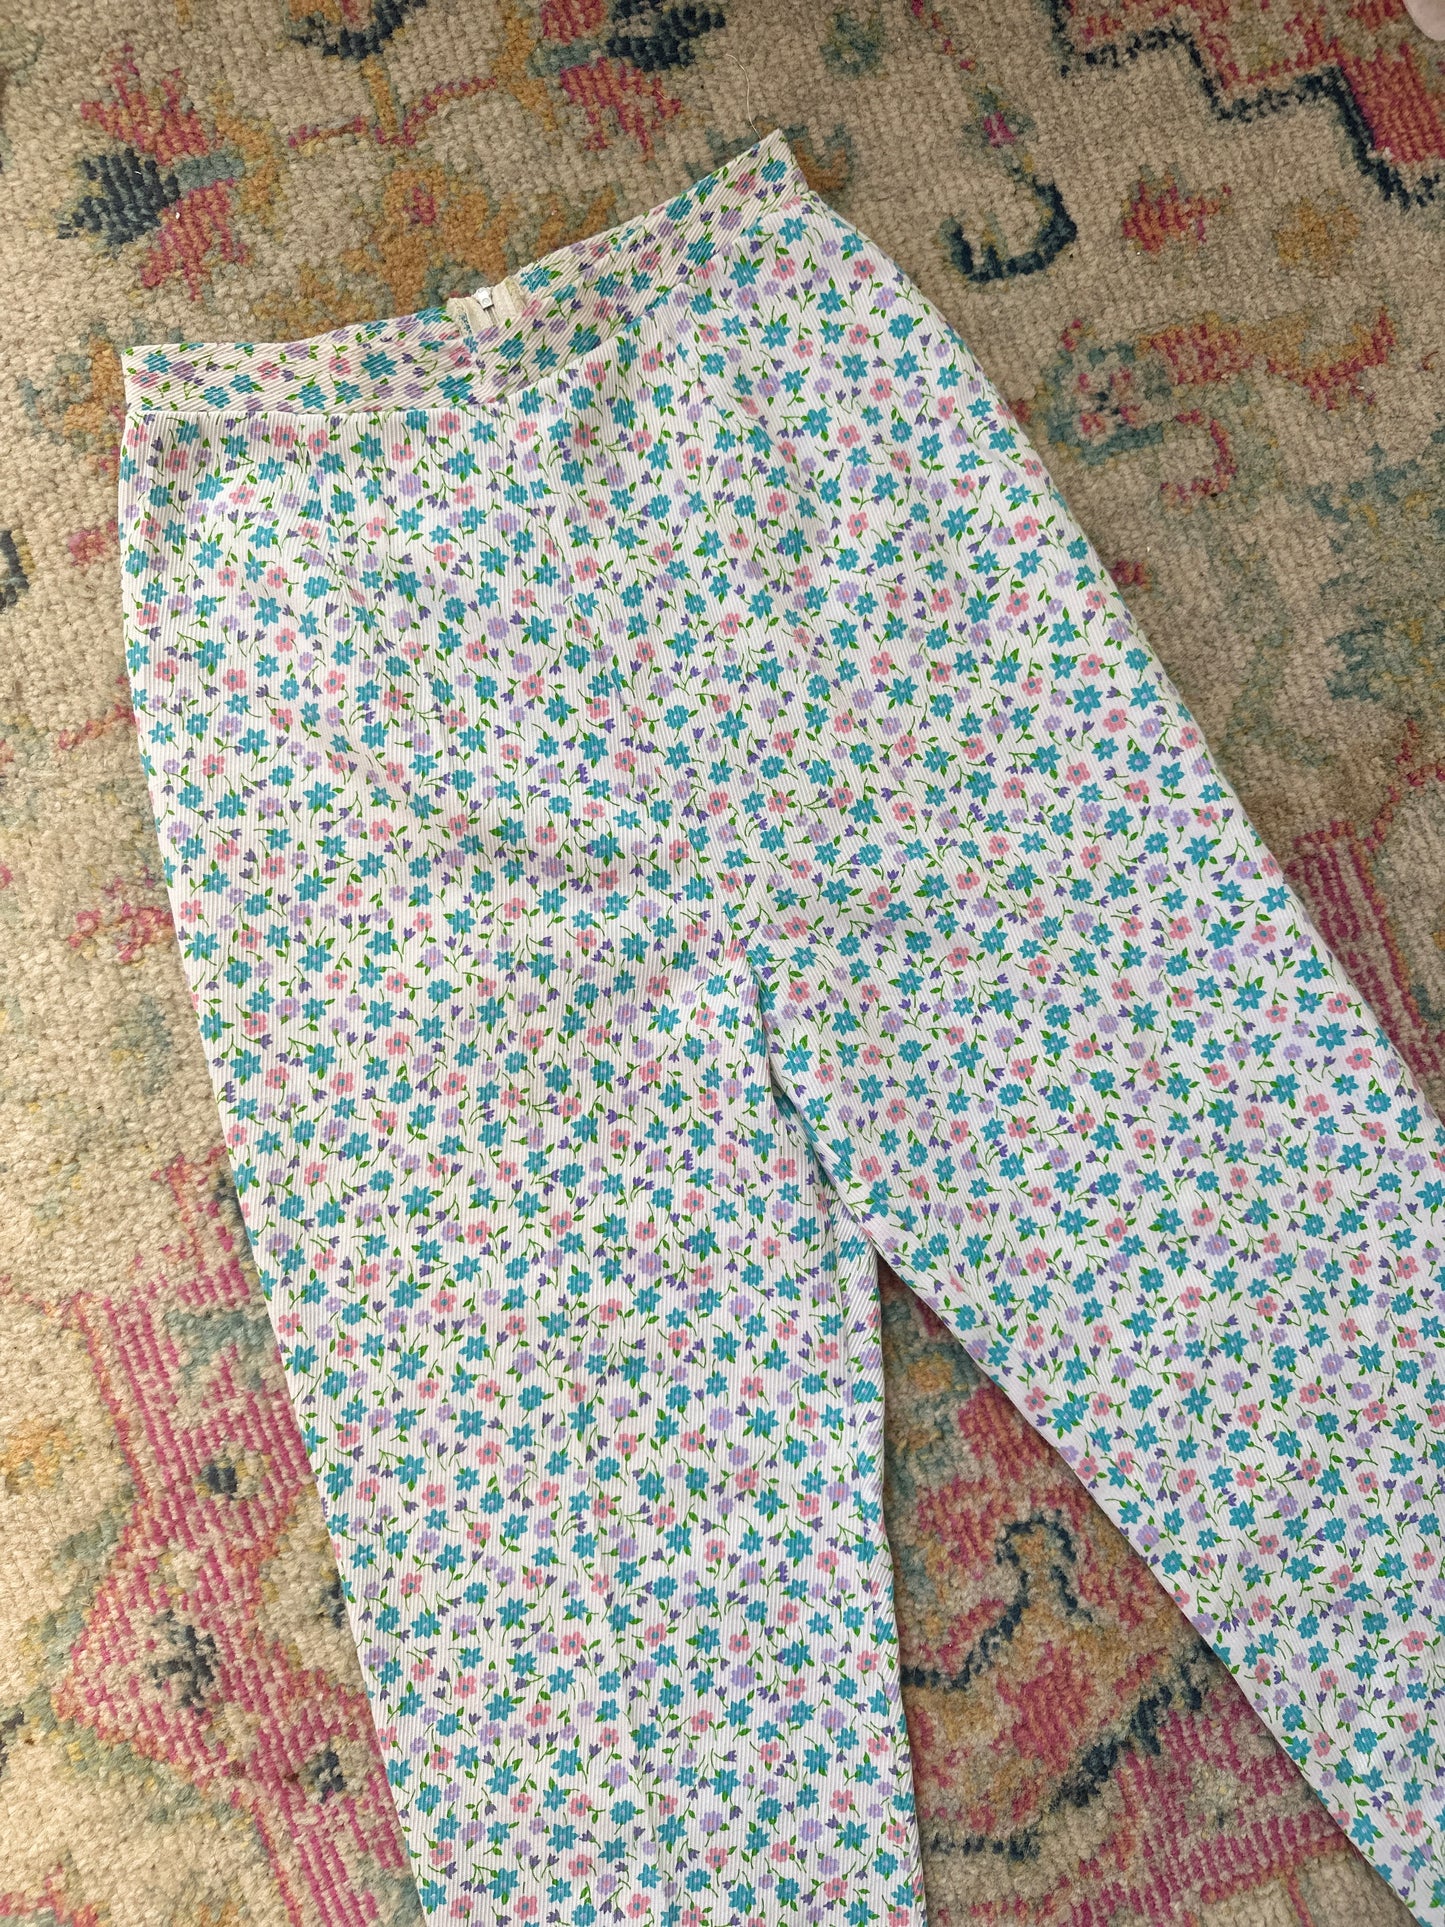 1970s Beeline Ditsy Floral Pants